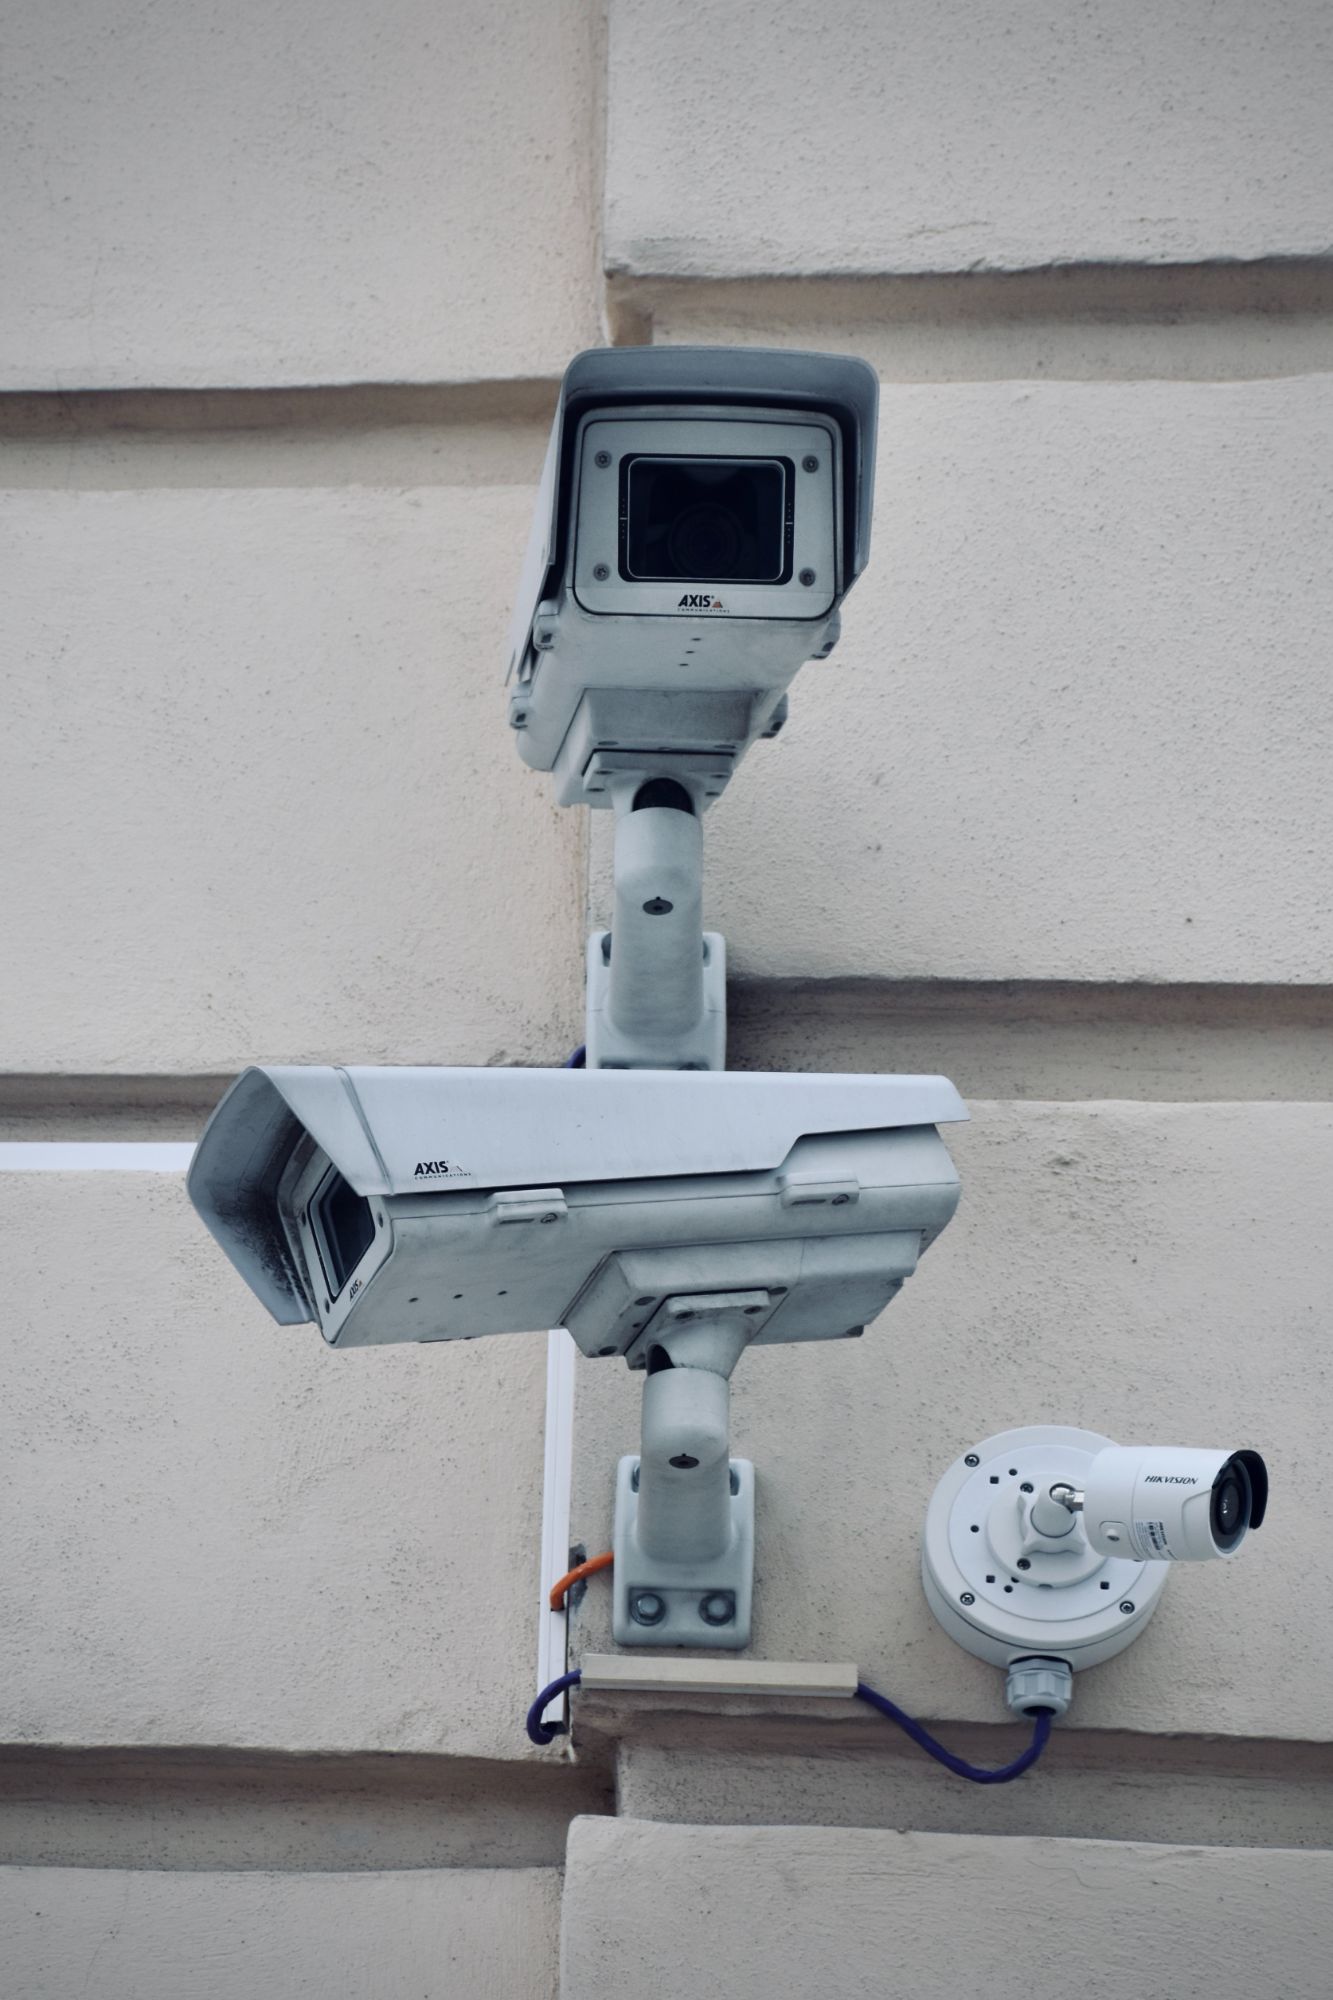 CCTV security providing intelligence.